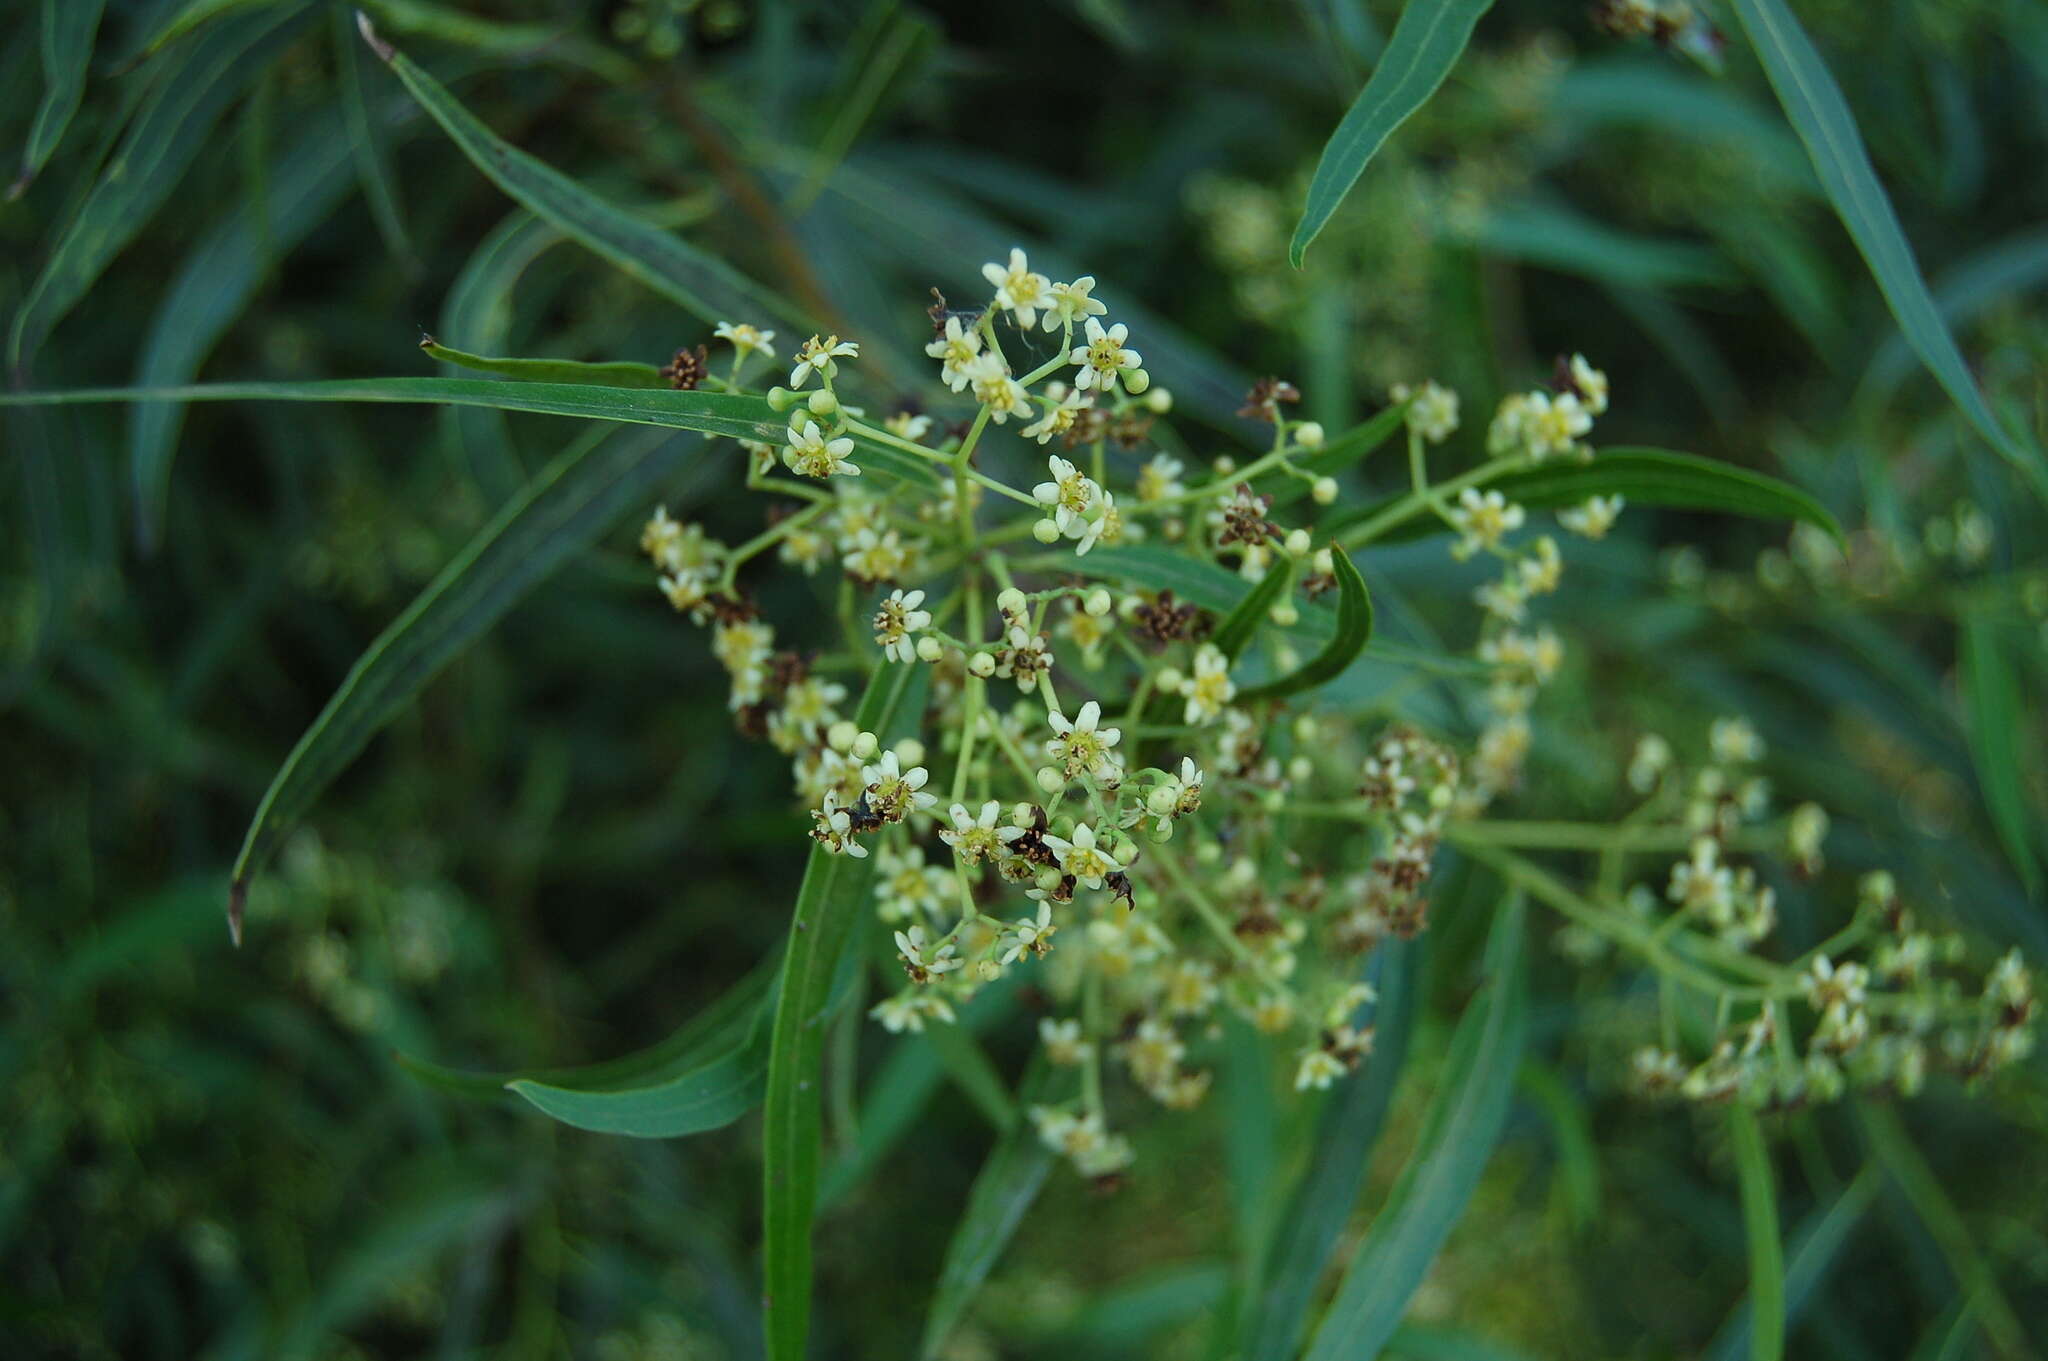 Image of Nectandra angustifolia (Schrad.) Nees & Mart. ex Nees